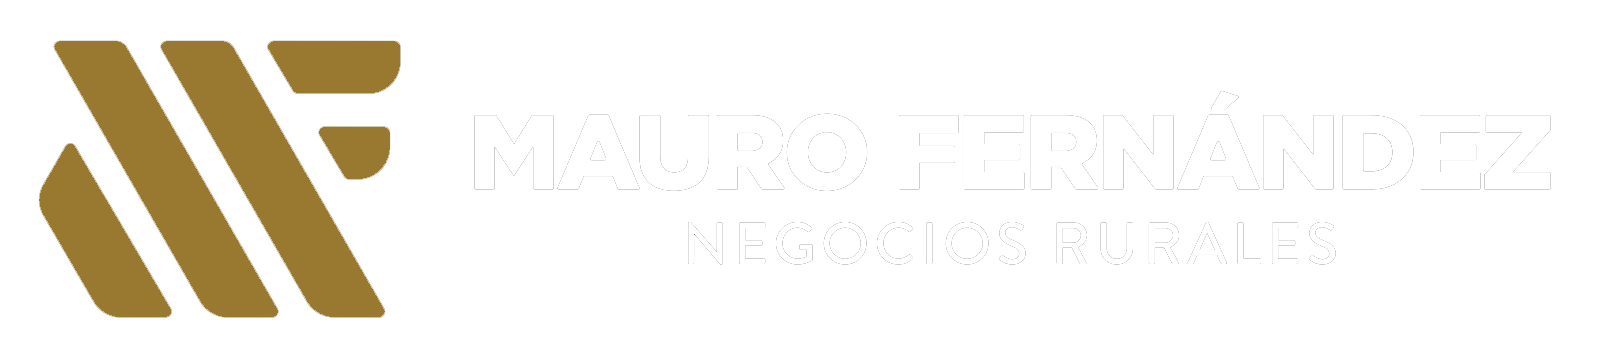 Mauro Fernández Negocios Rurales